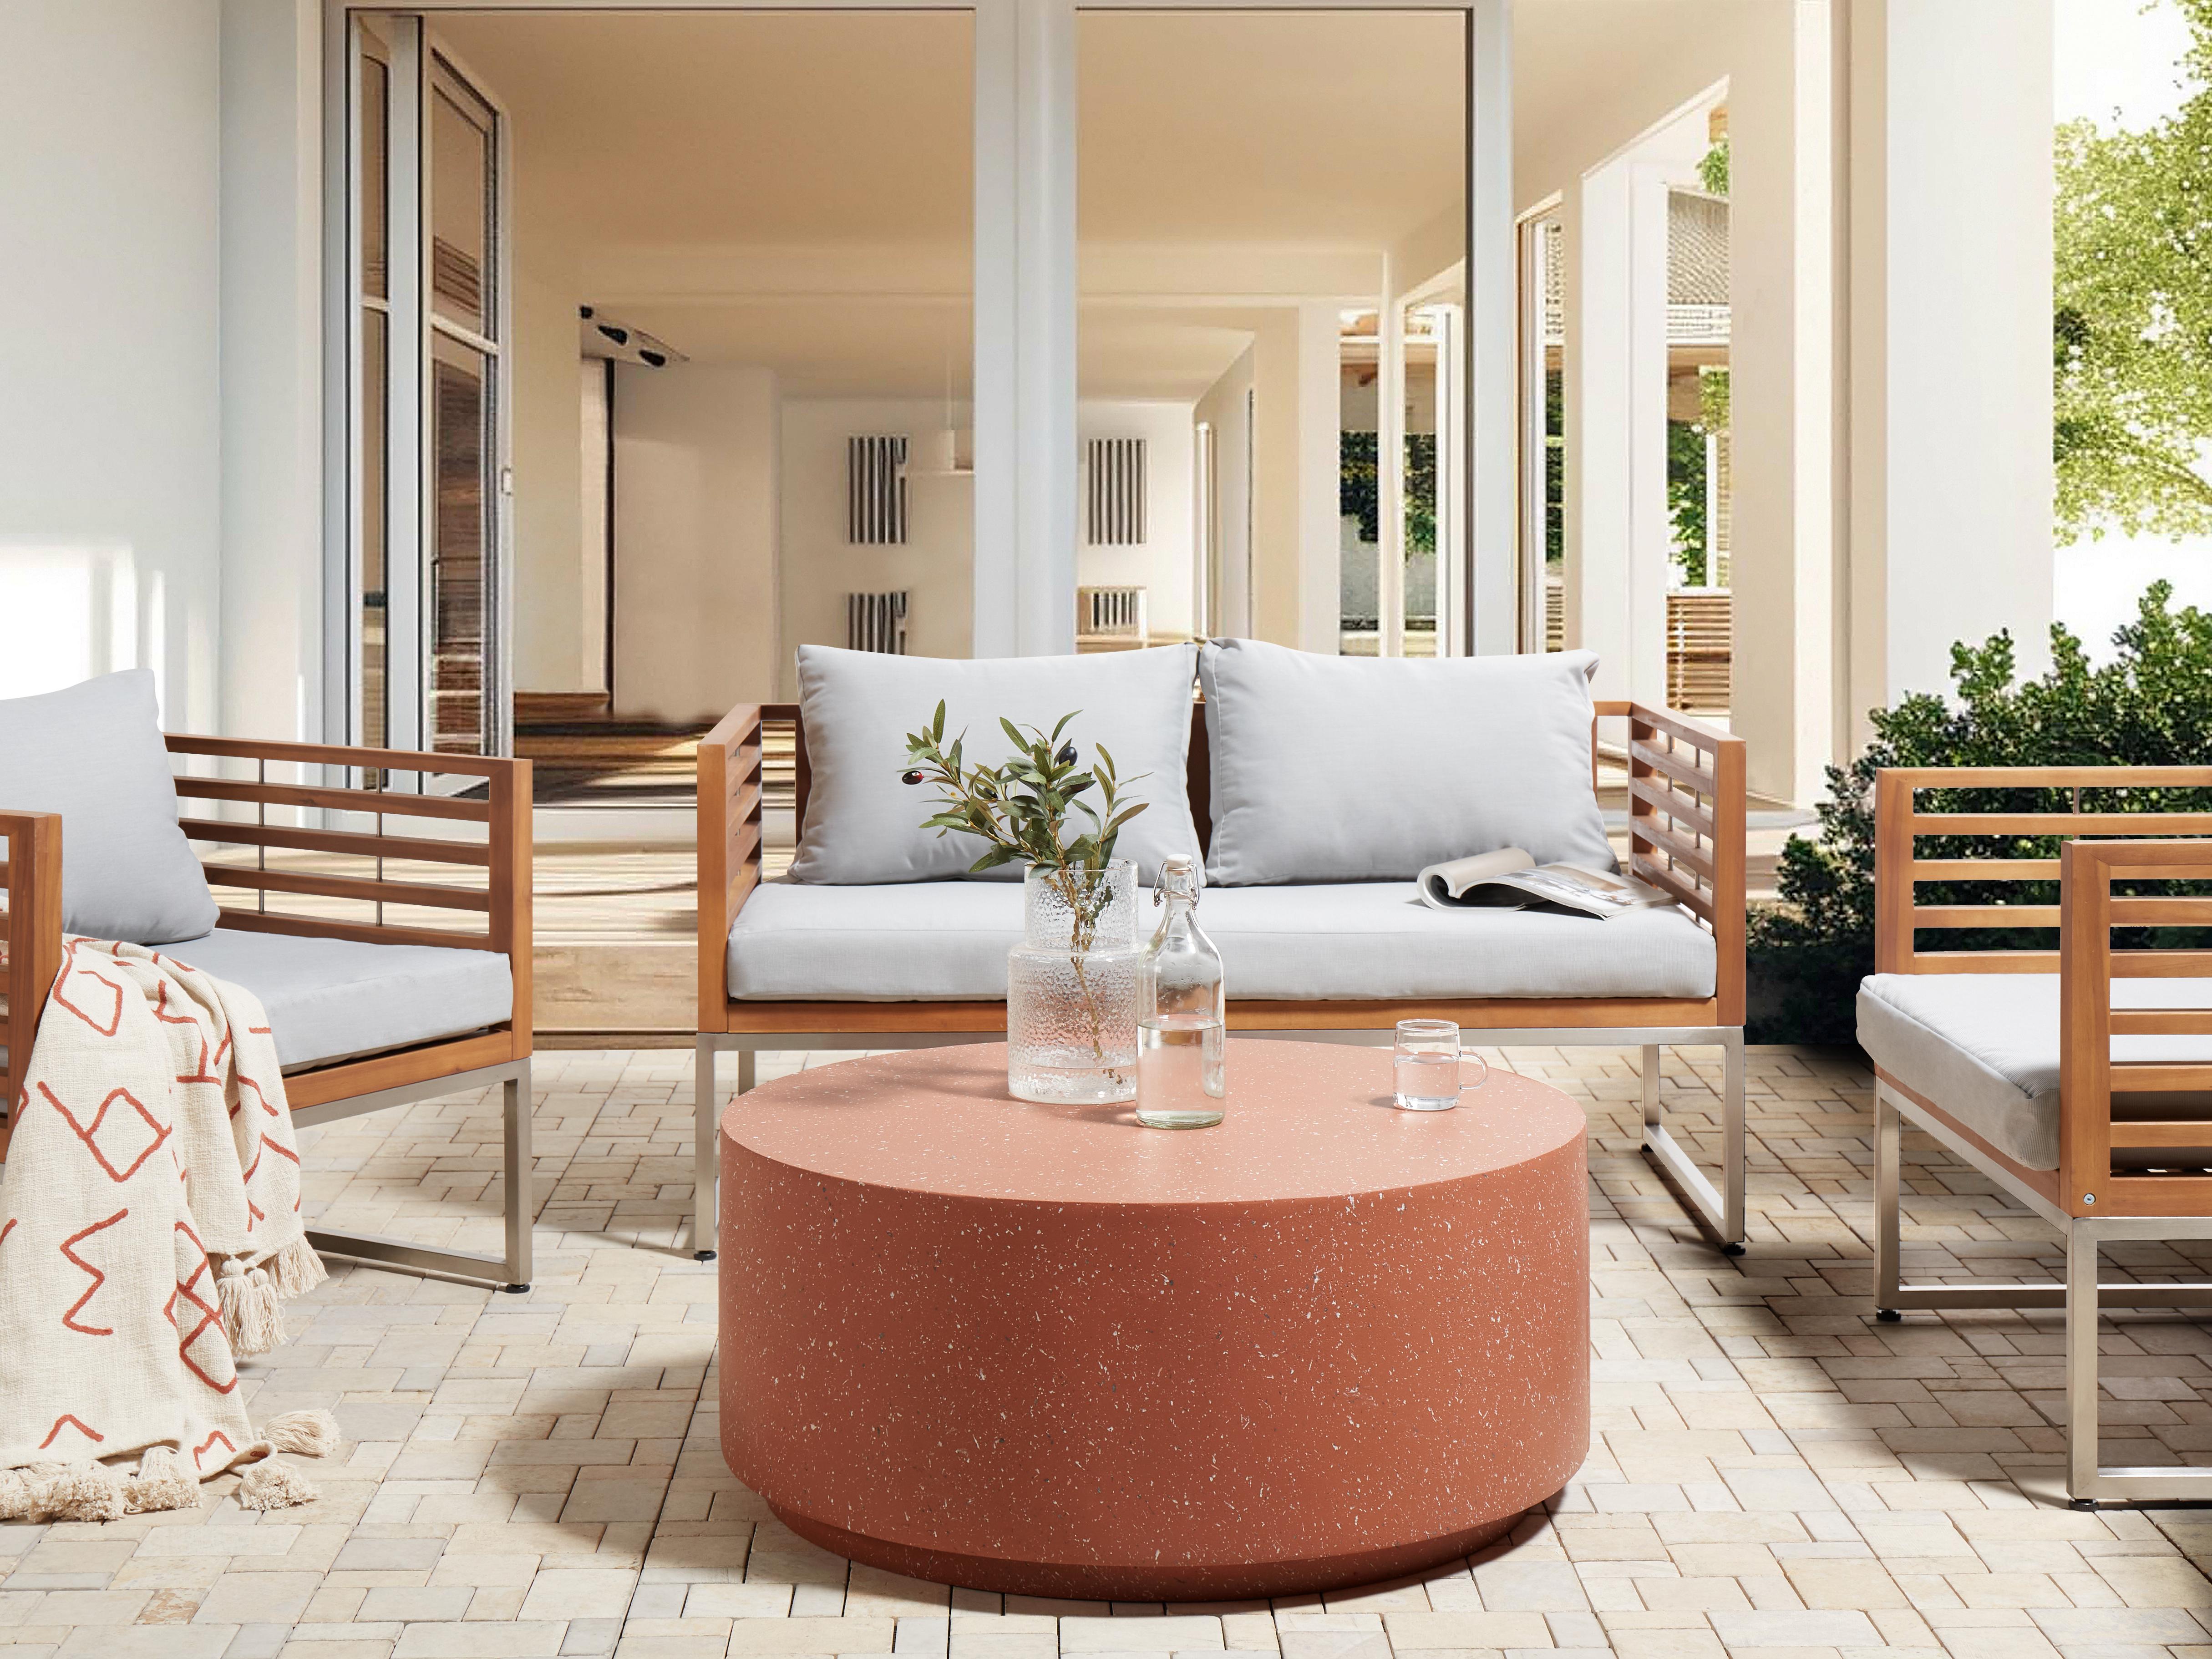 Terrasse élégante avec table en terrazzo